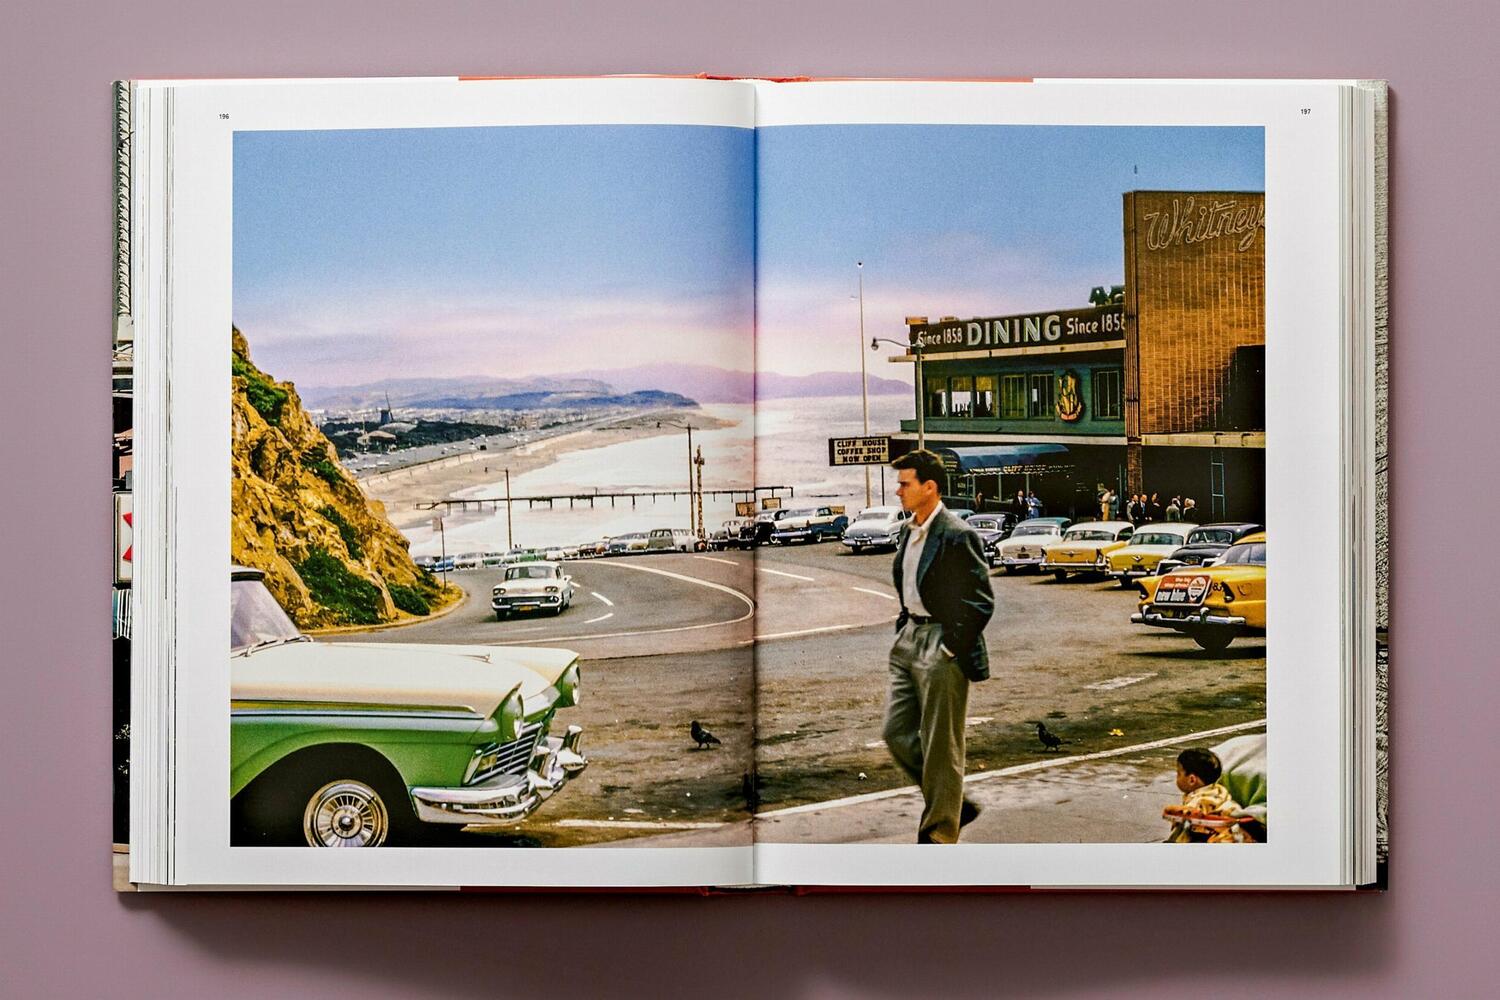 Bild: 9783836574853 | San Francisco. Portrait of a City | Richie Unterberger | Buch | 480 S.